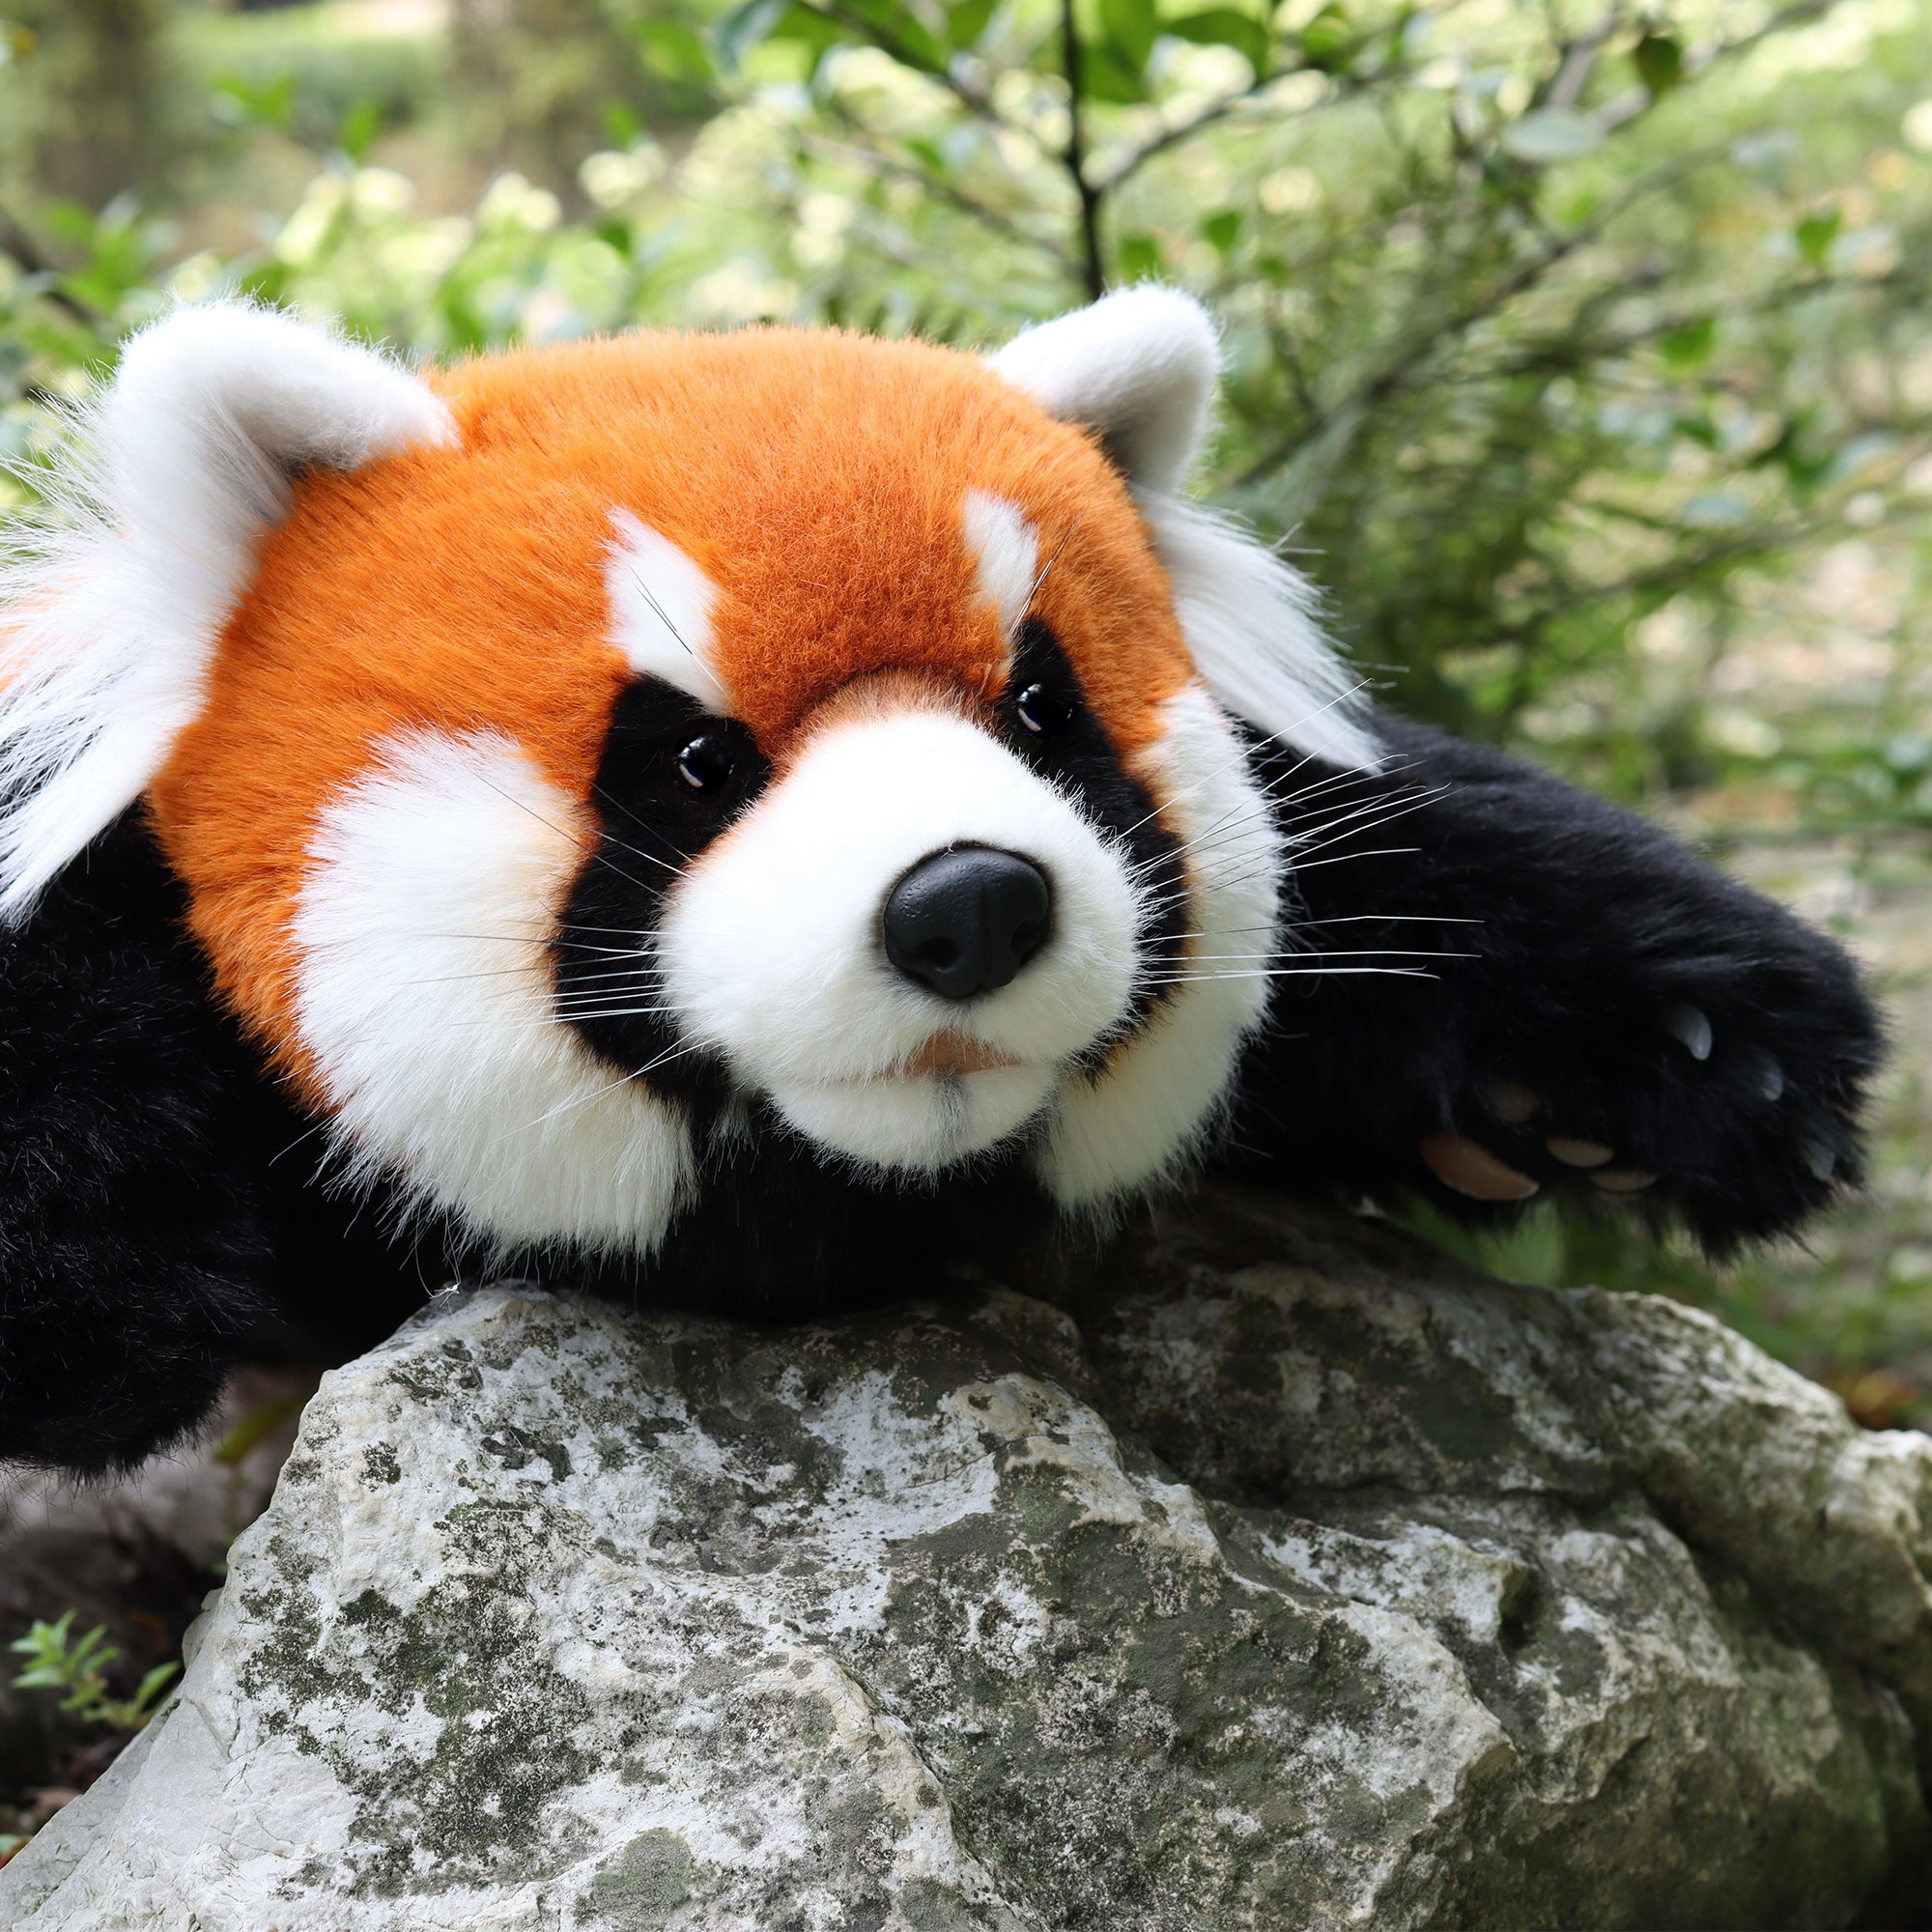 Chongker Red Panda Weighted Stuffed Animal Plush 2.5lb